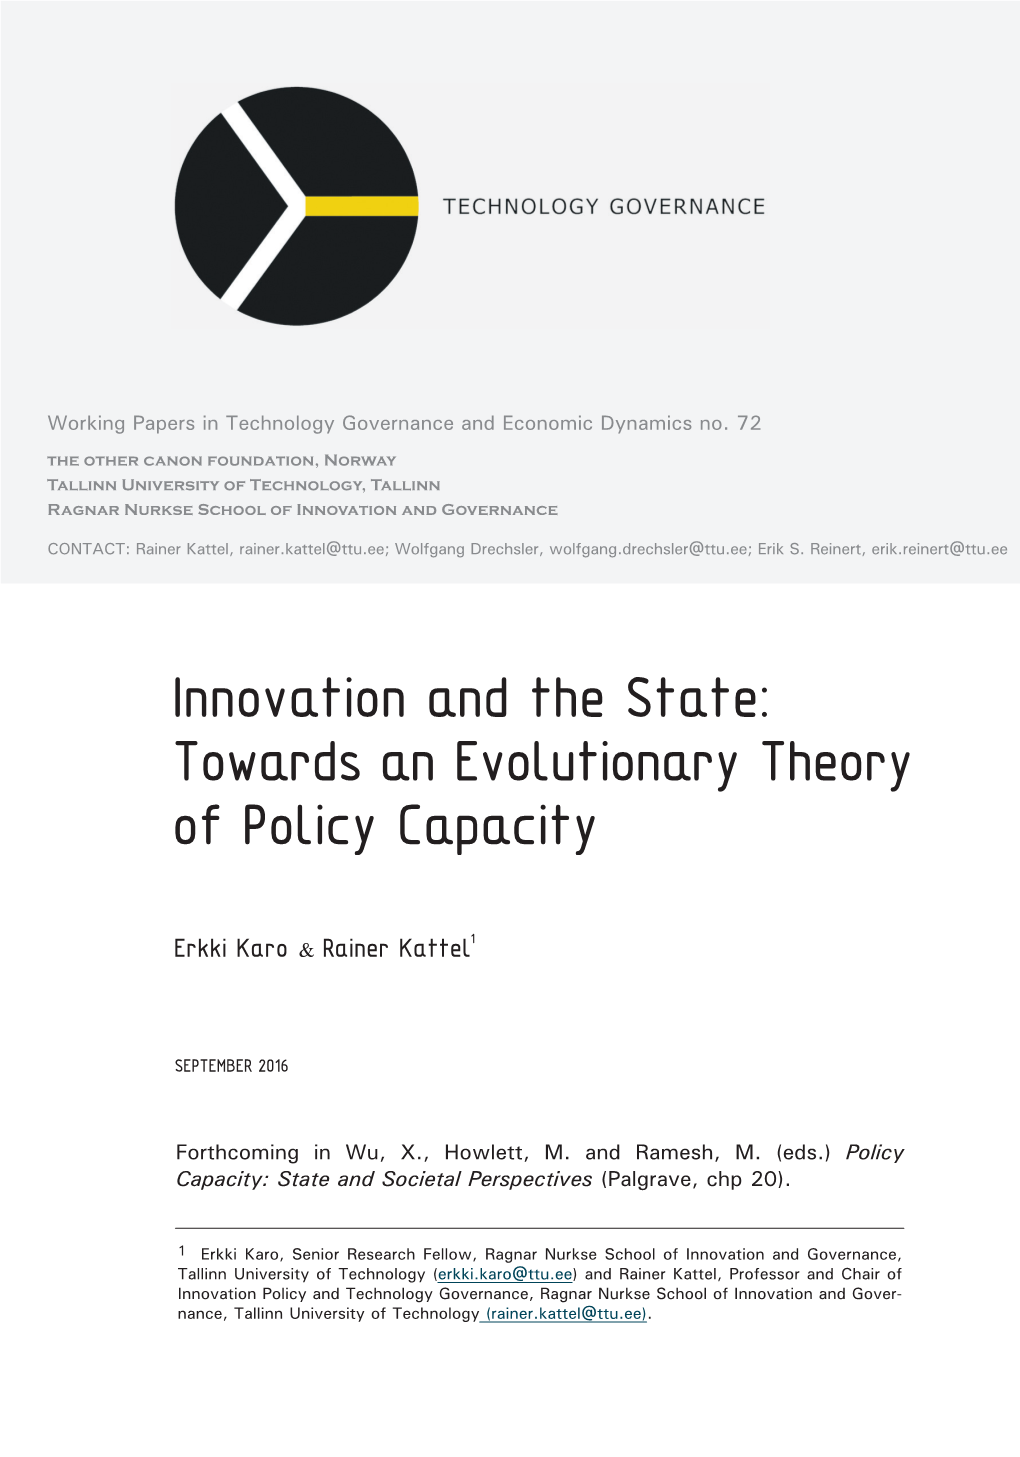 Towards an Evolutionary Theory of Policy Capacity